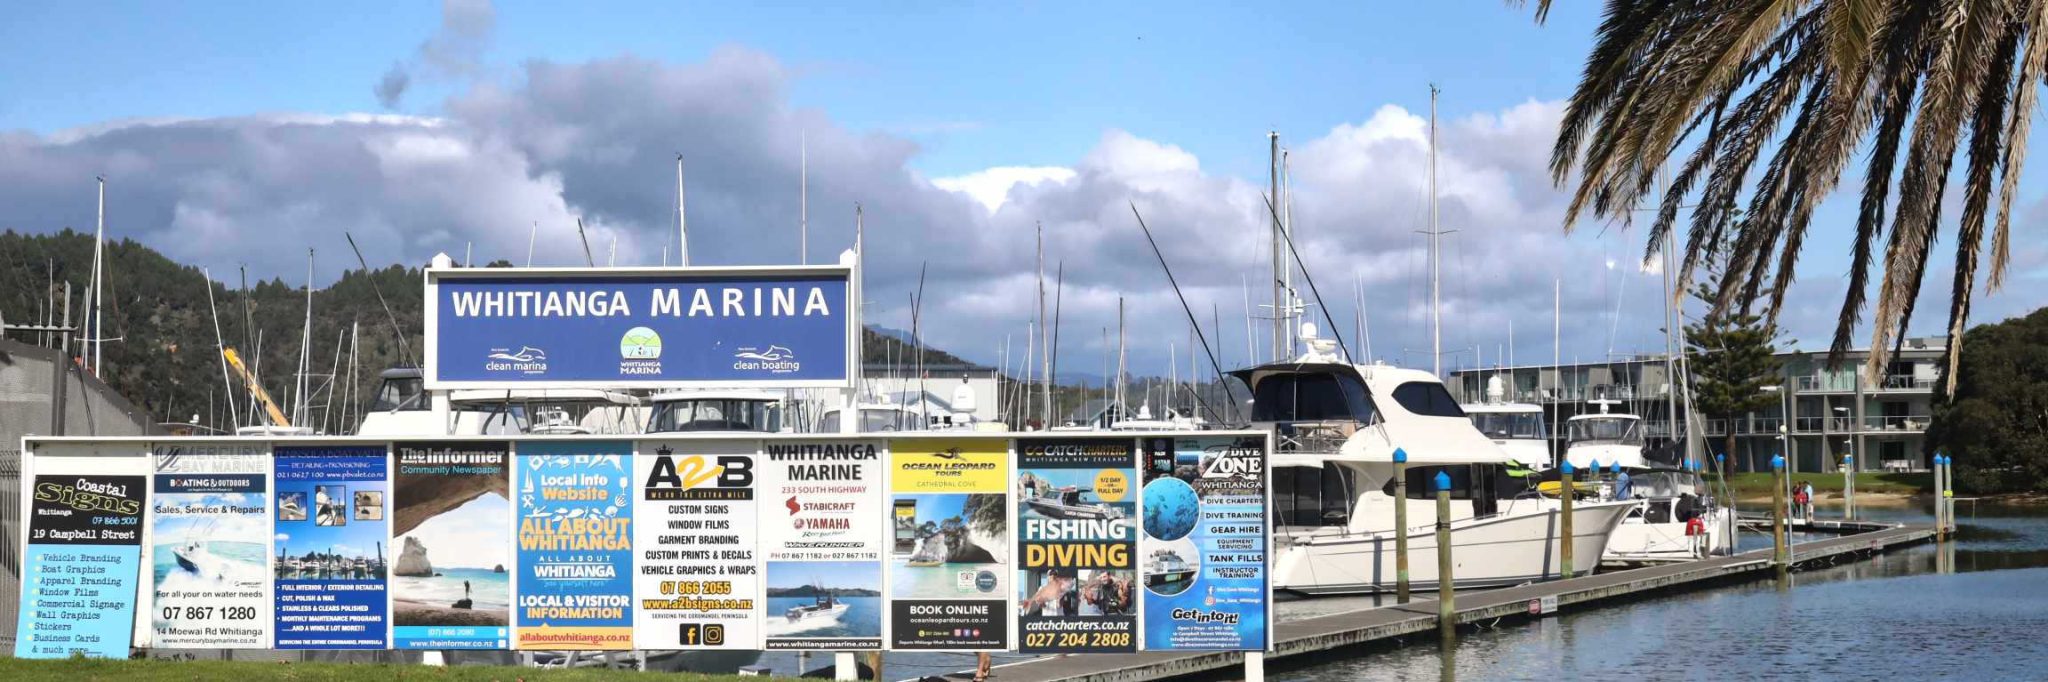 Whitianga marina public billboard, North Island, Coromandel, New Zealand